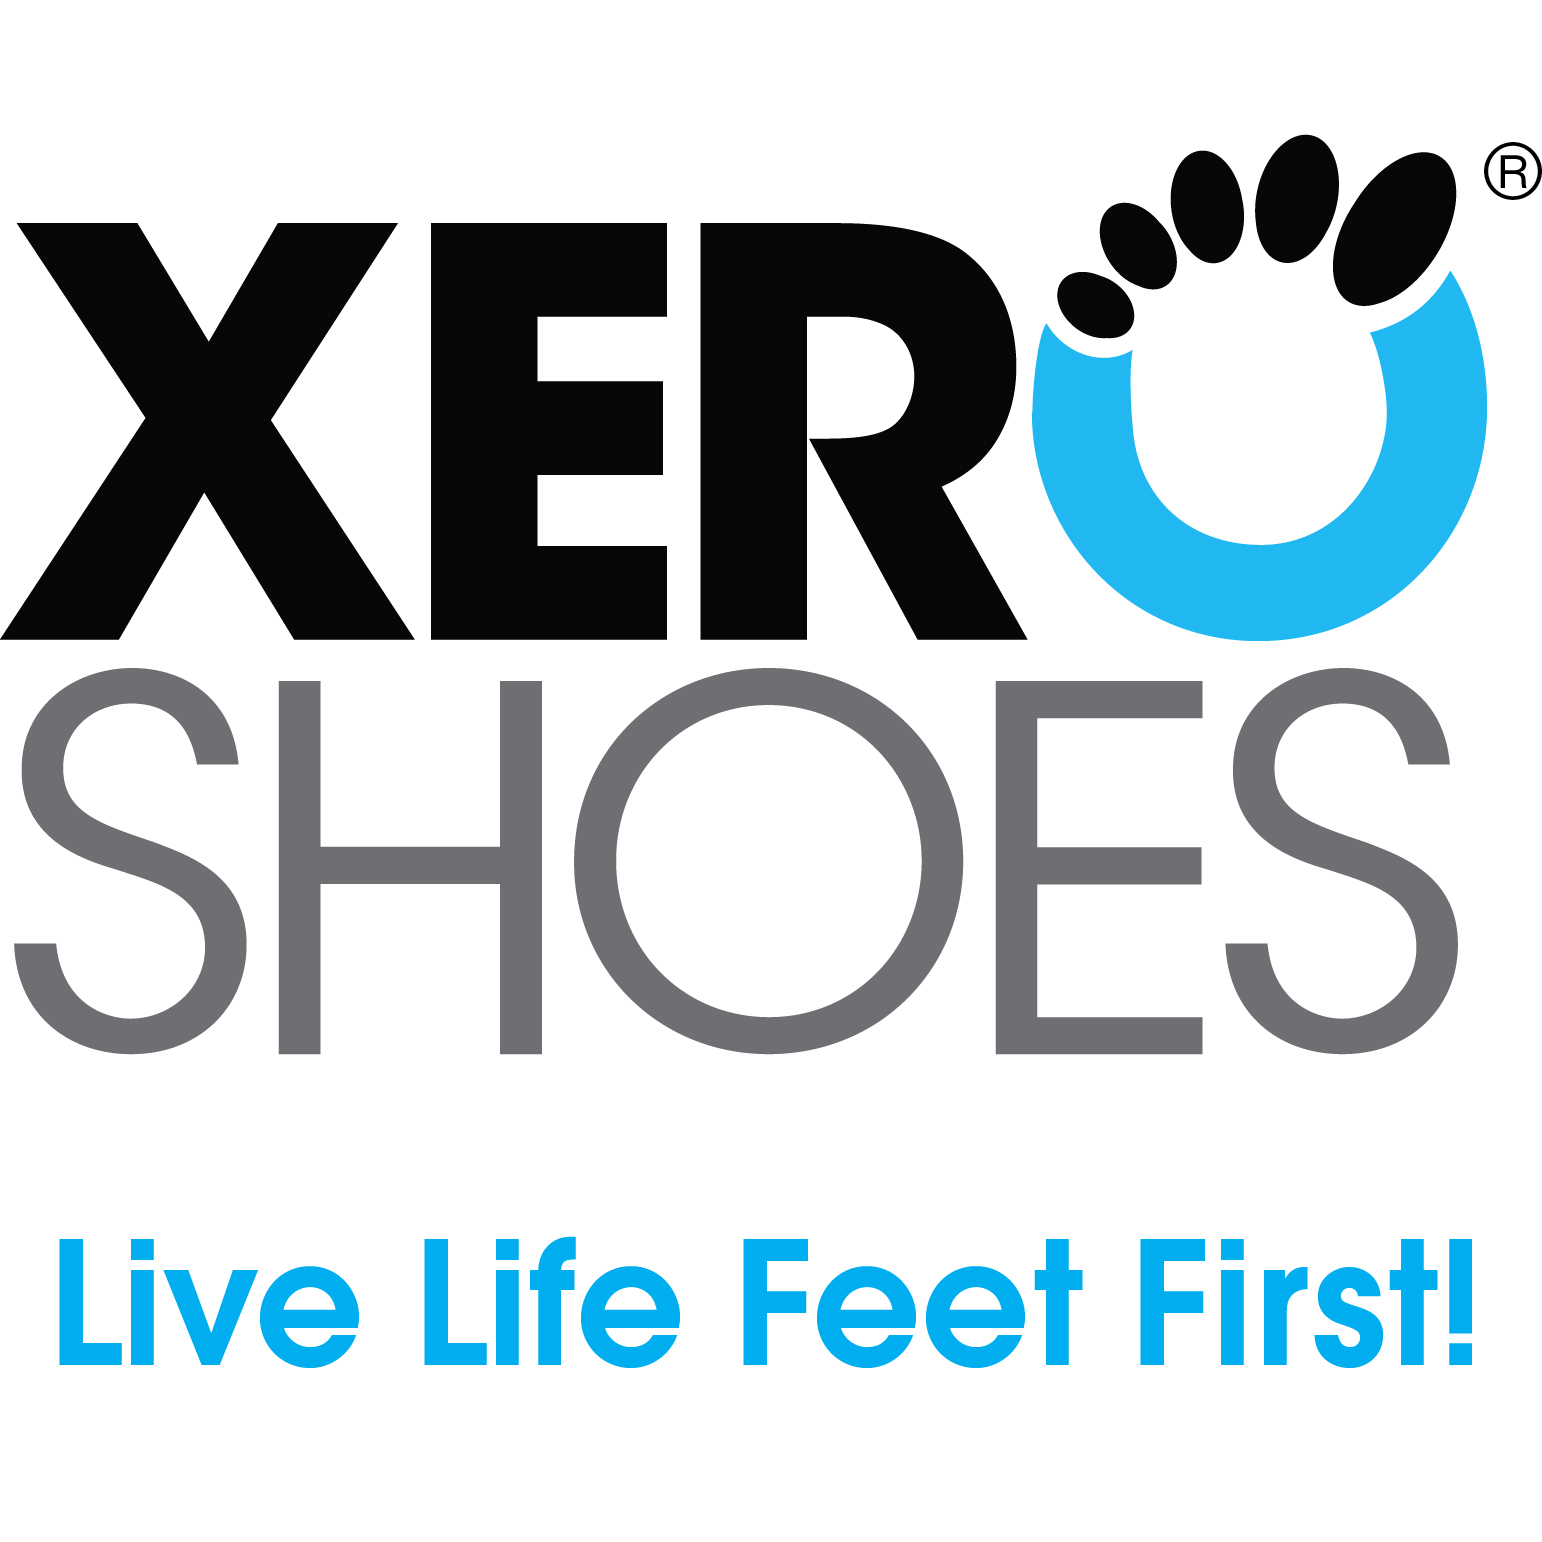 Xero shoes logo